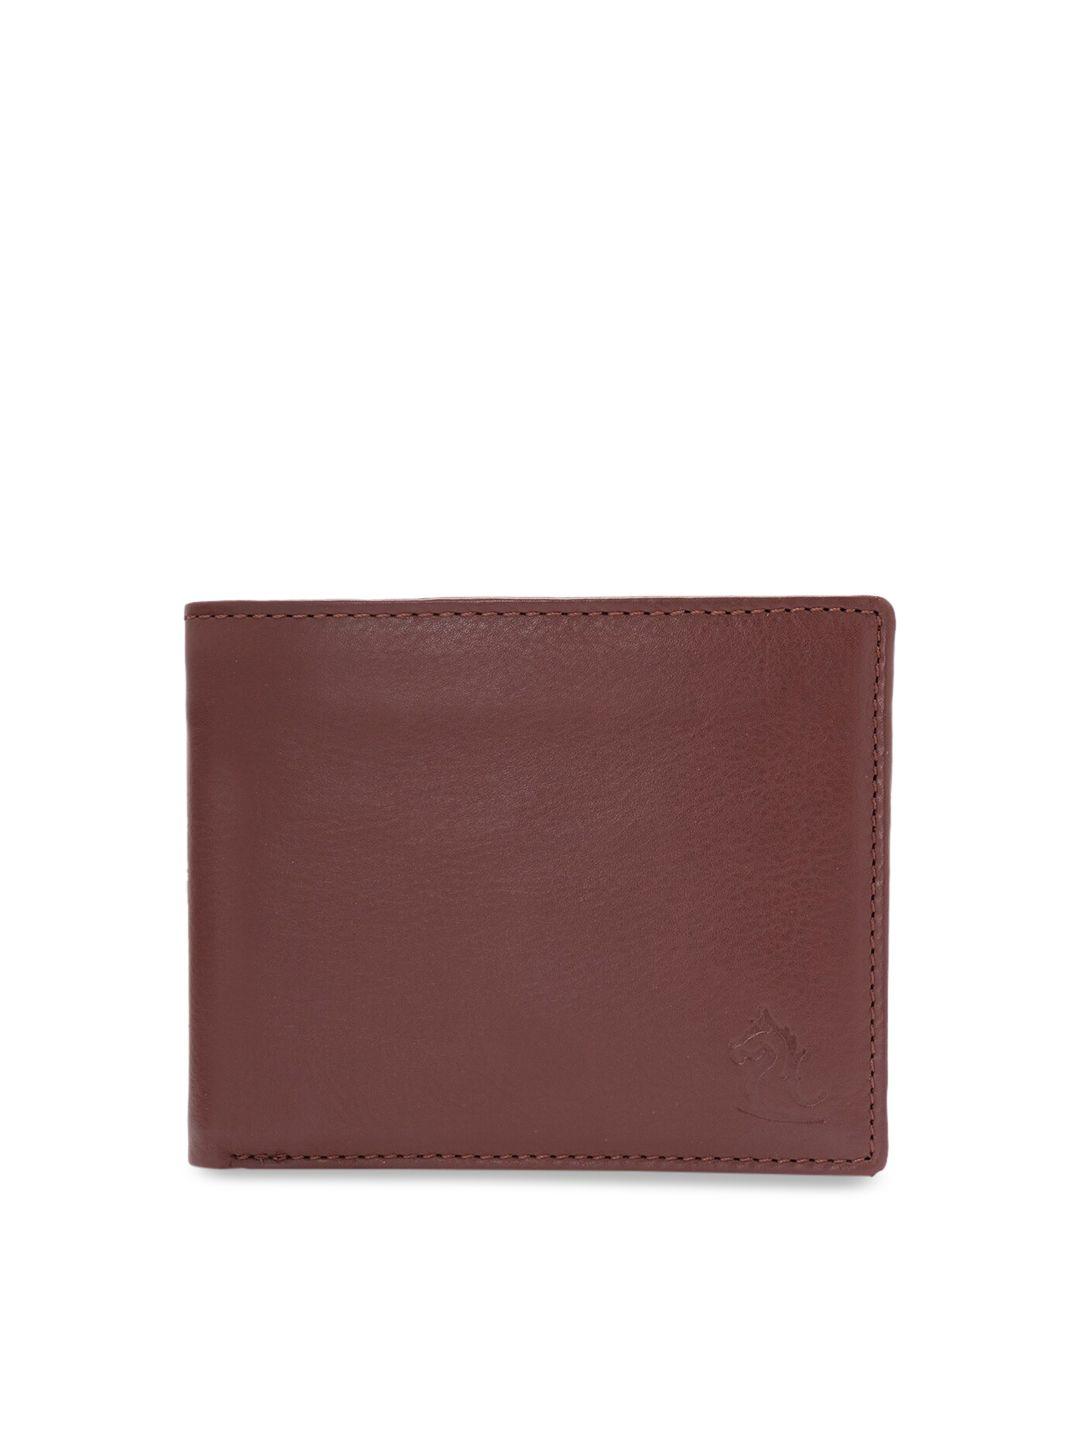 kara men brown solid leather two fold wallet